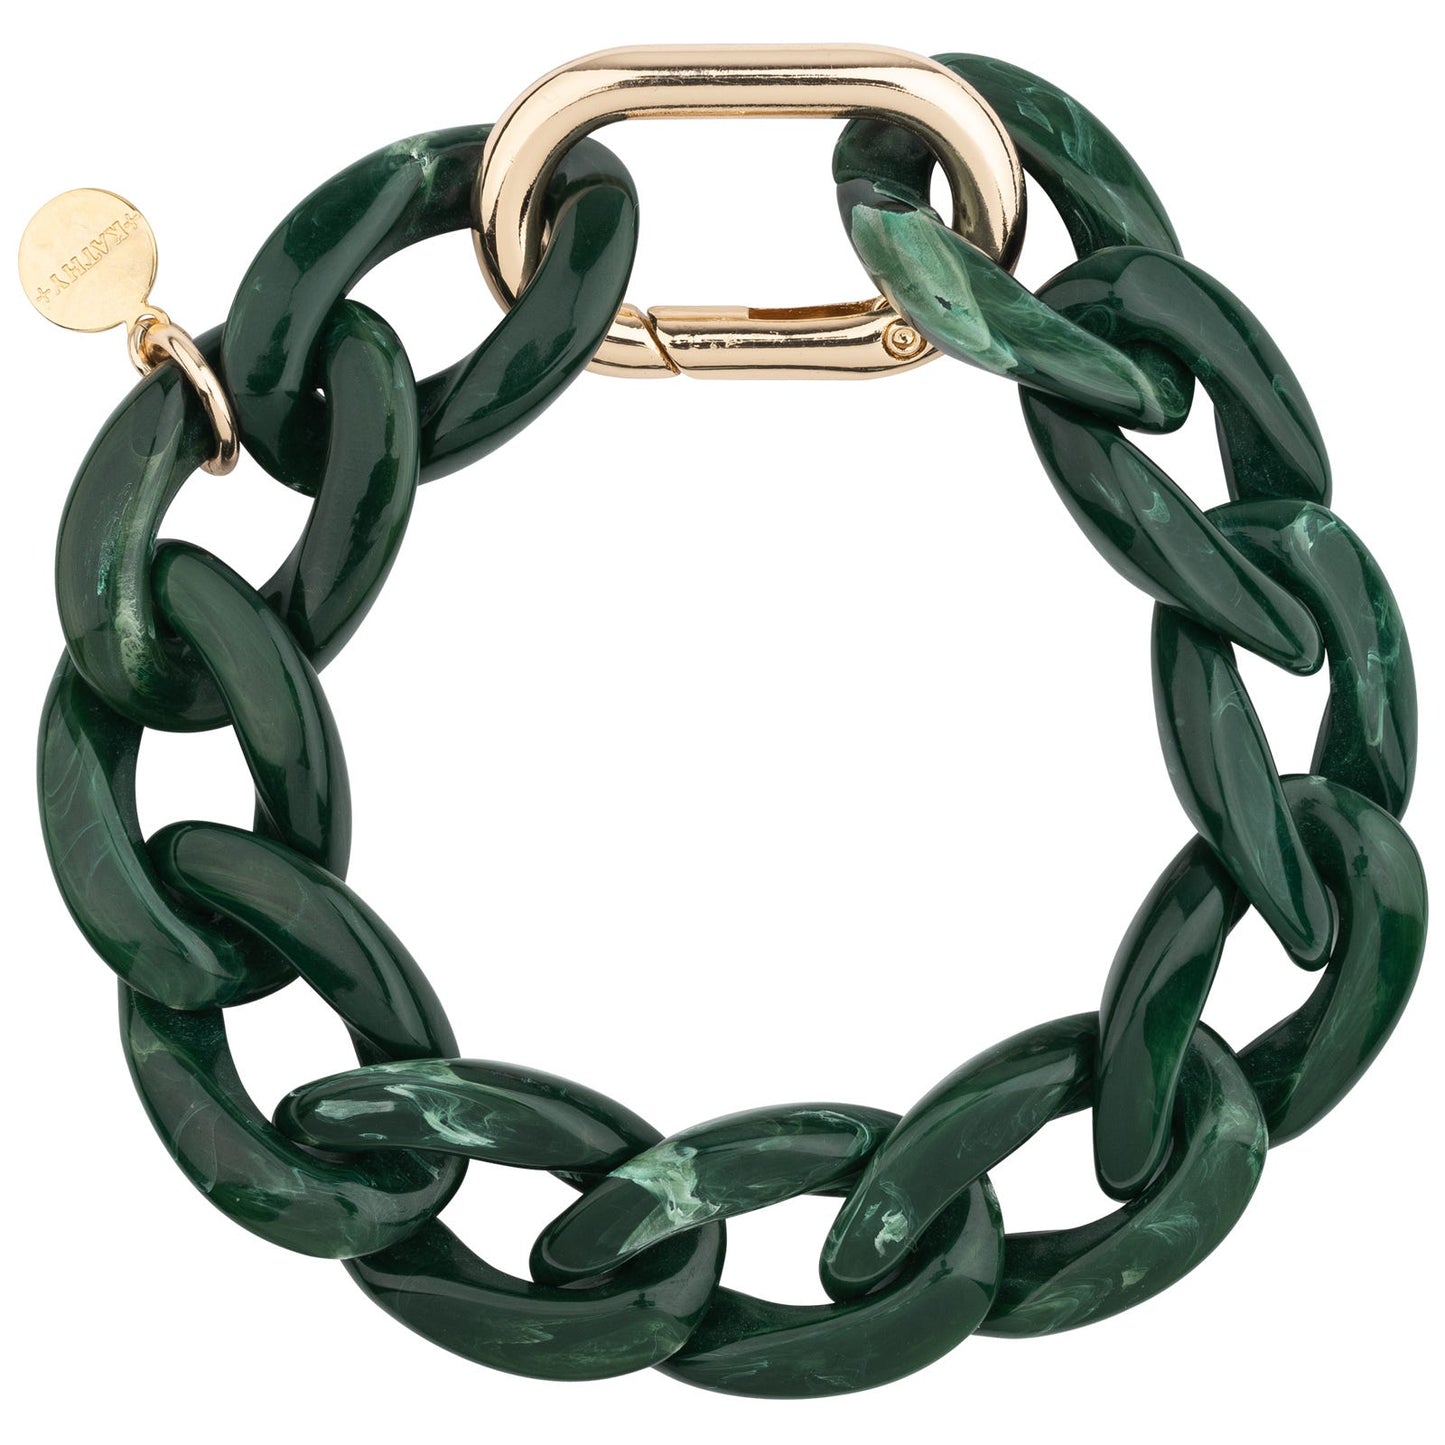 Kathy Smaragdgrün Armband